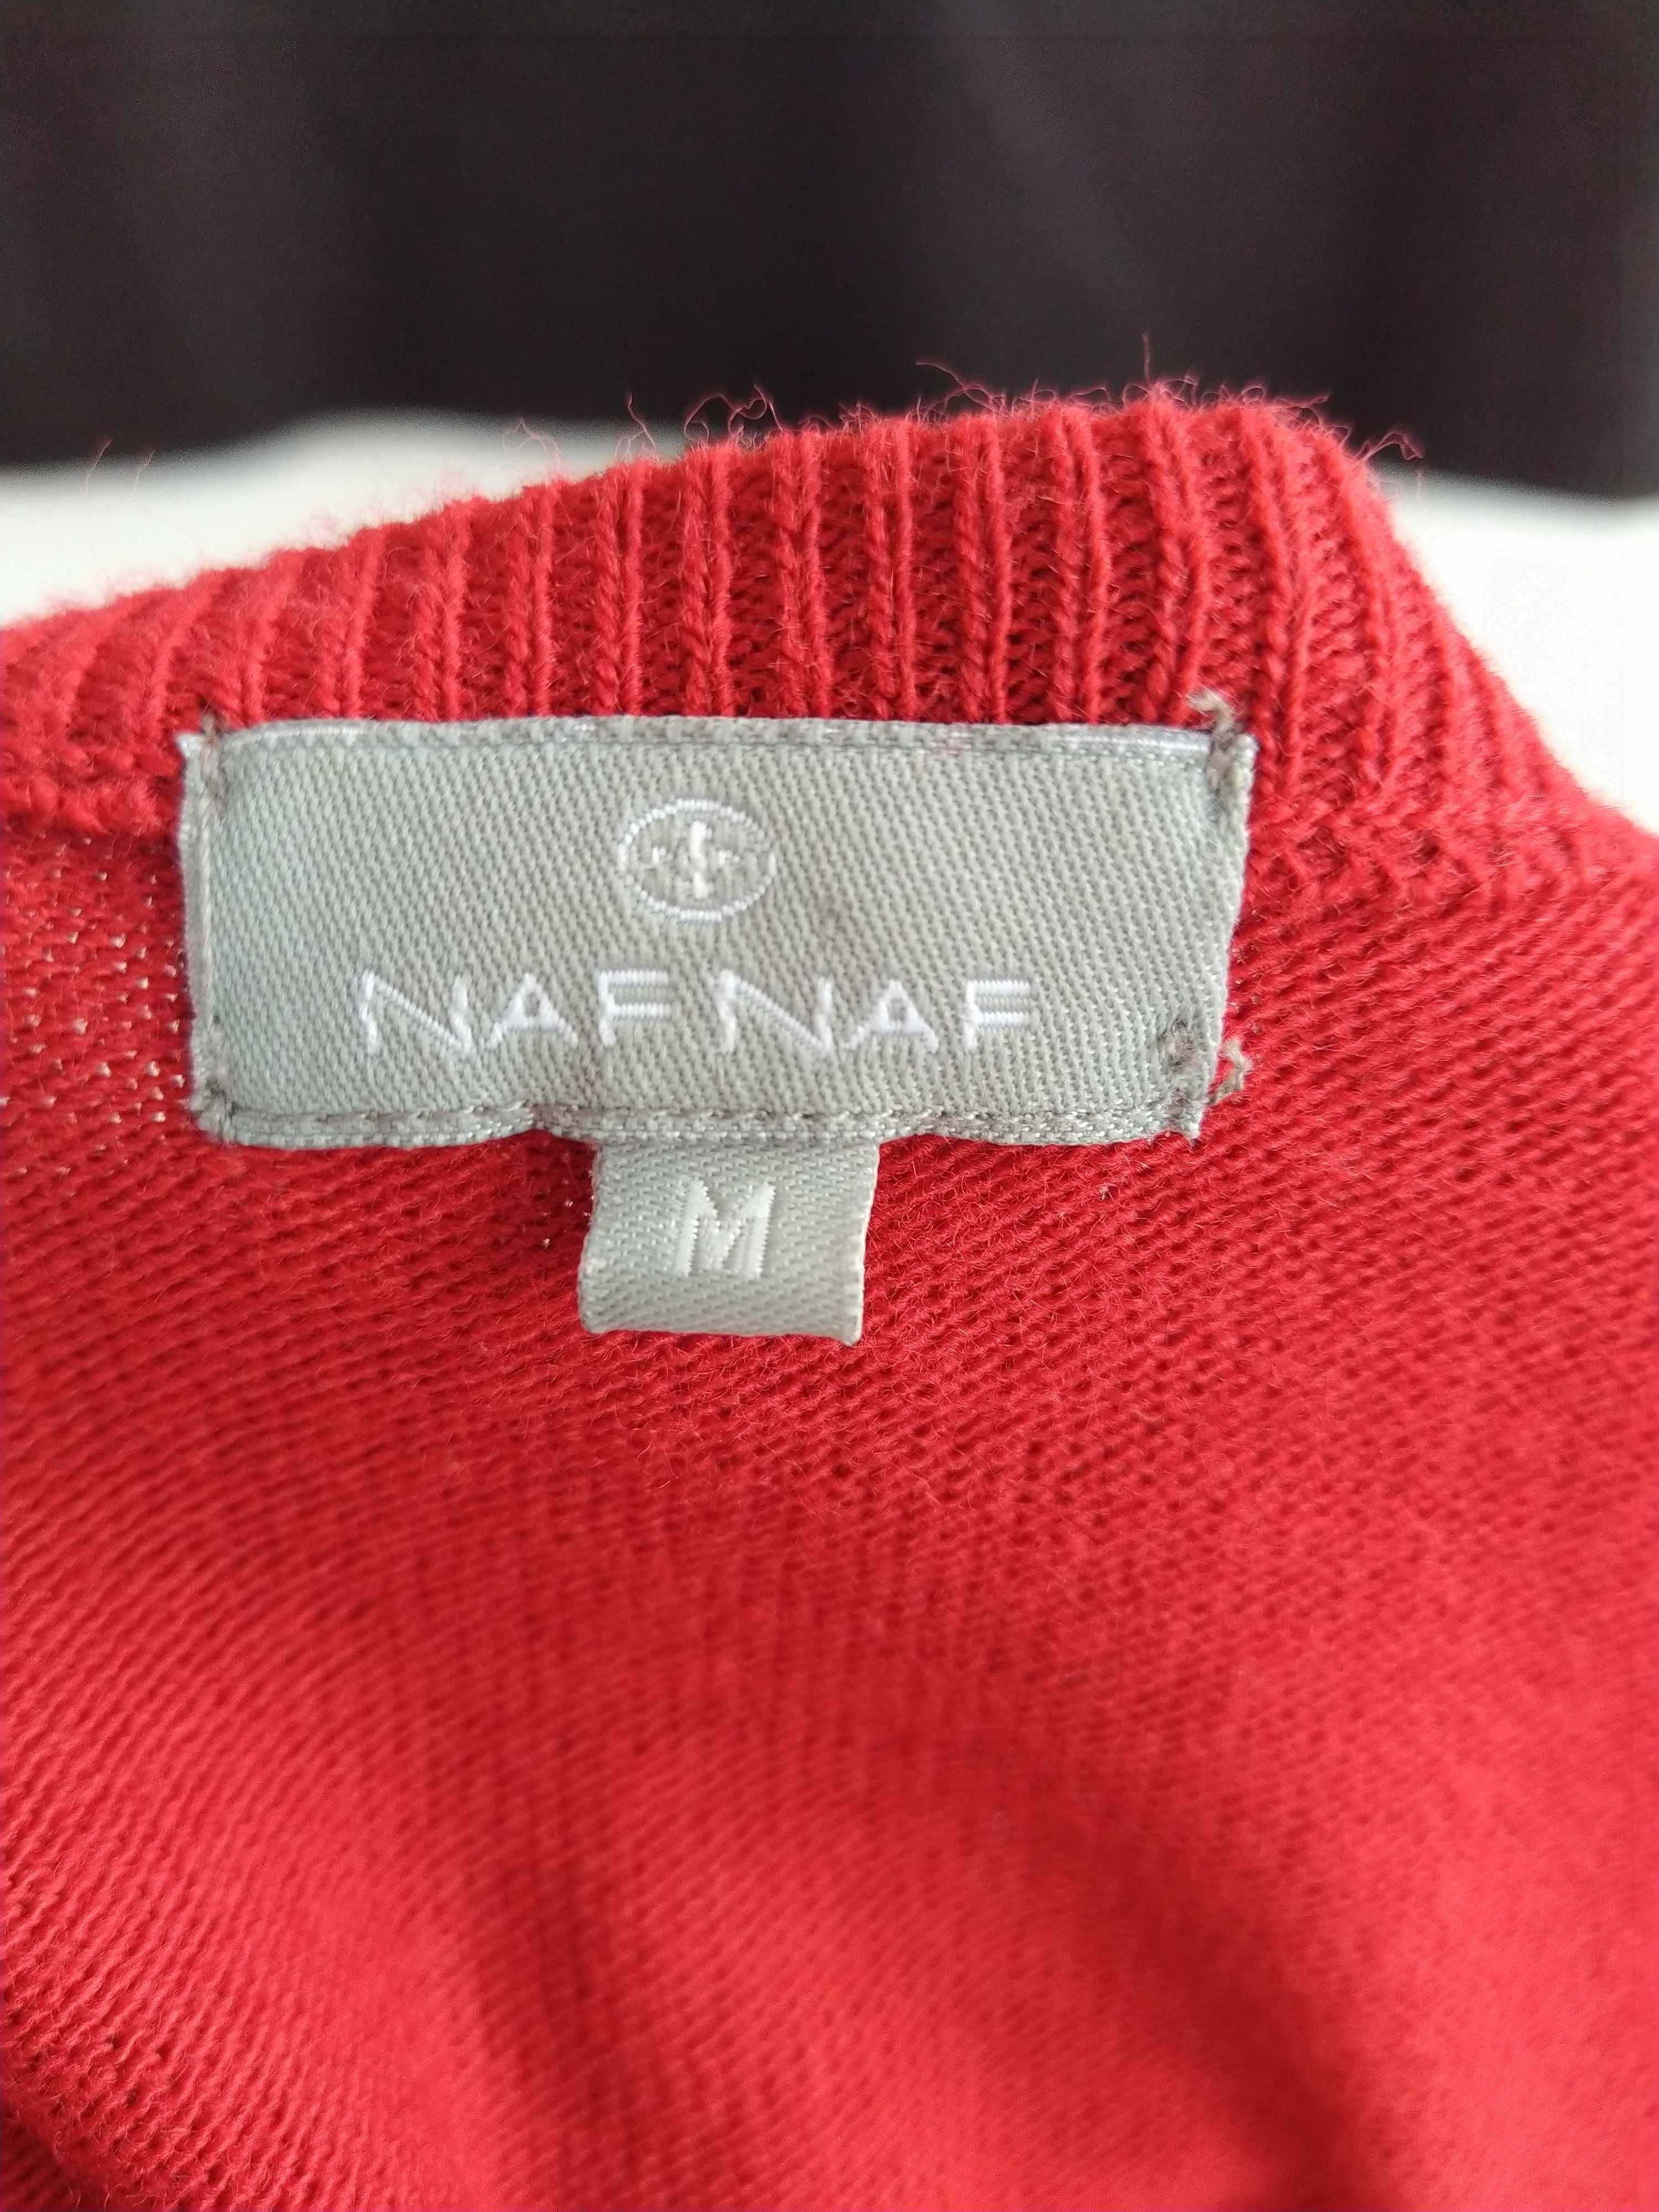 Conjunto Naf Naf tricolor de malha - Tamanho S / M